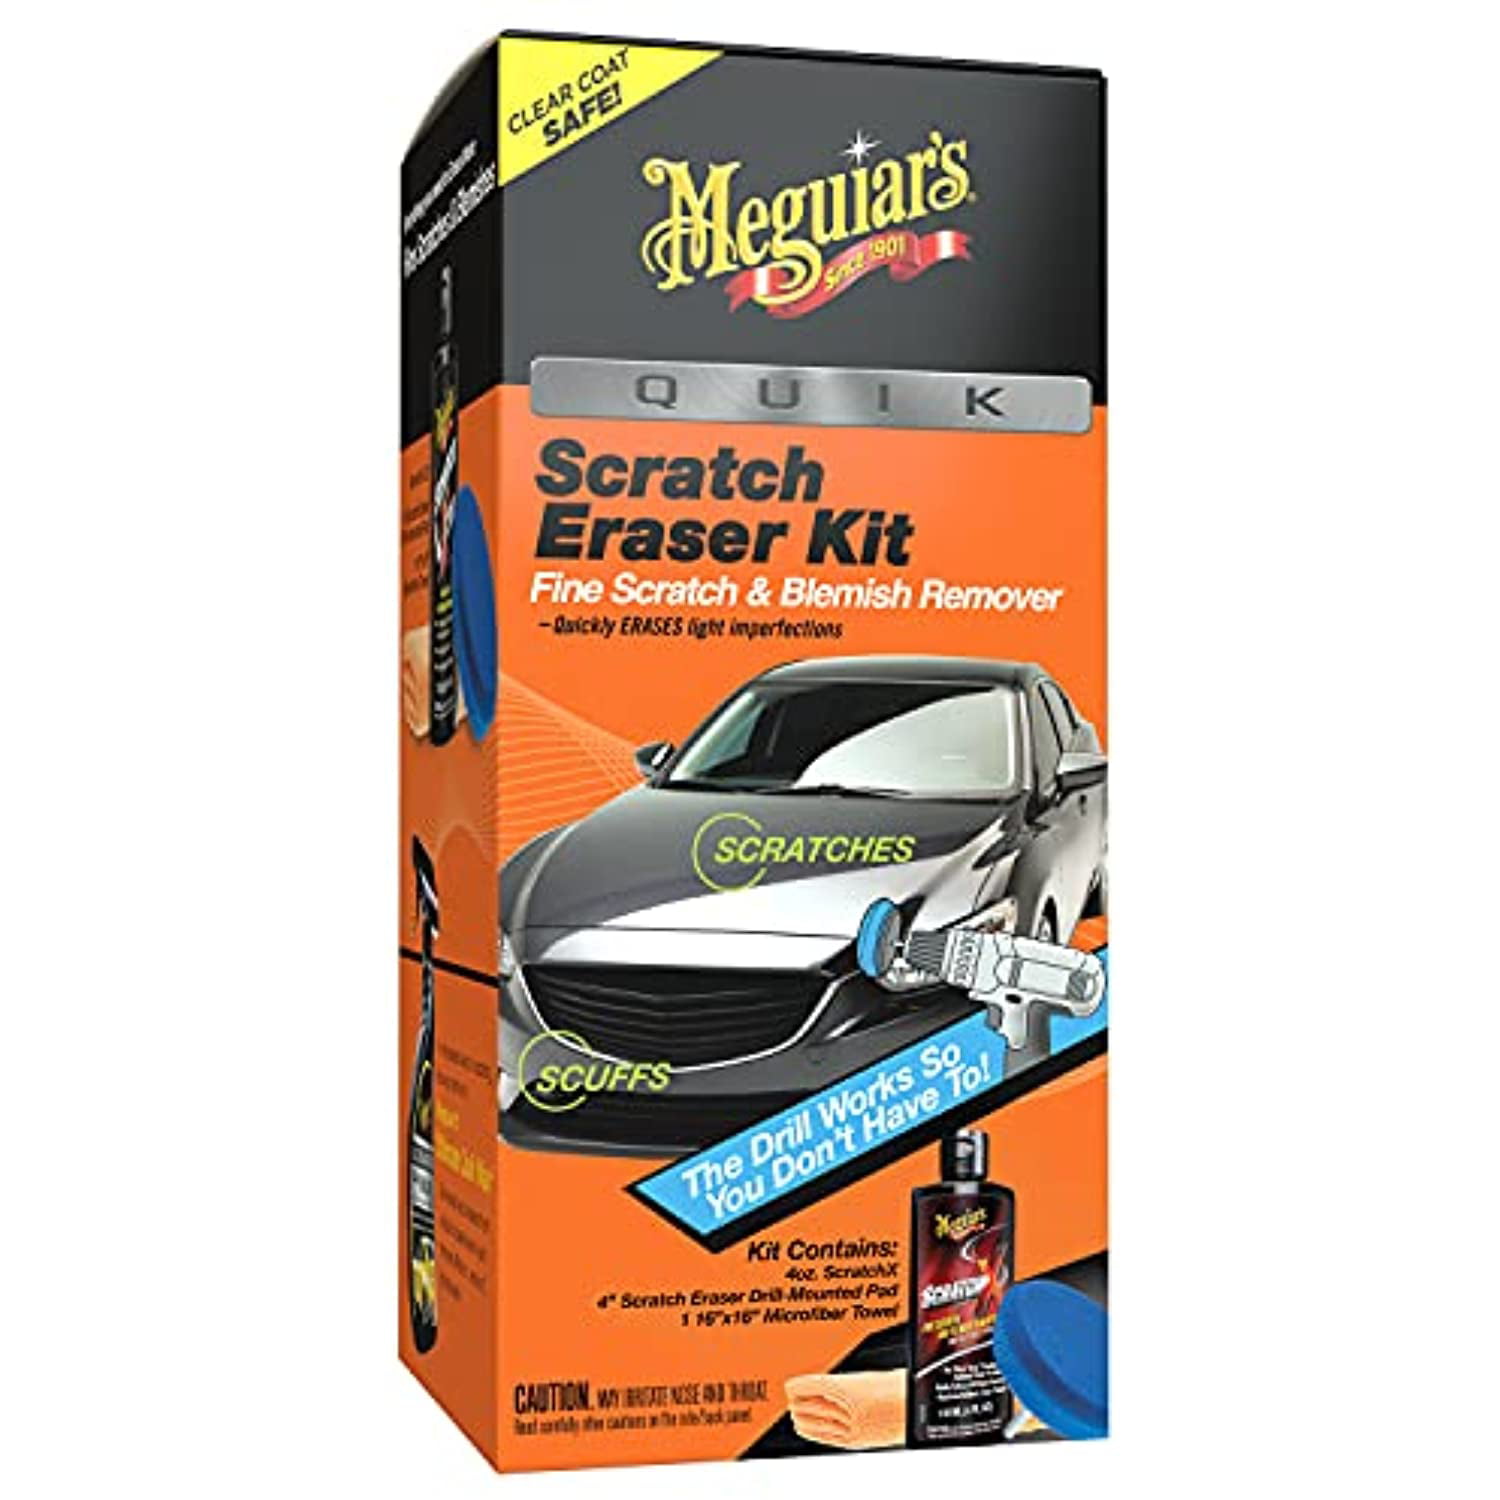 Image of Meguiars Quick Scratch Eraser Kit